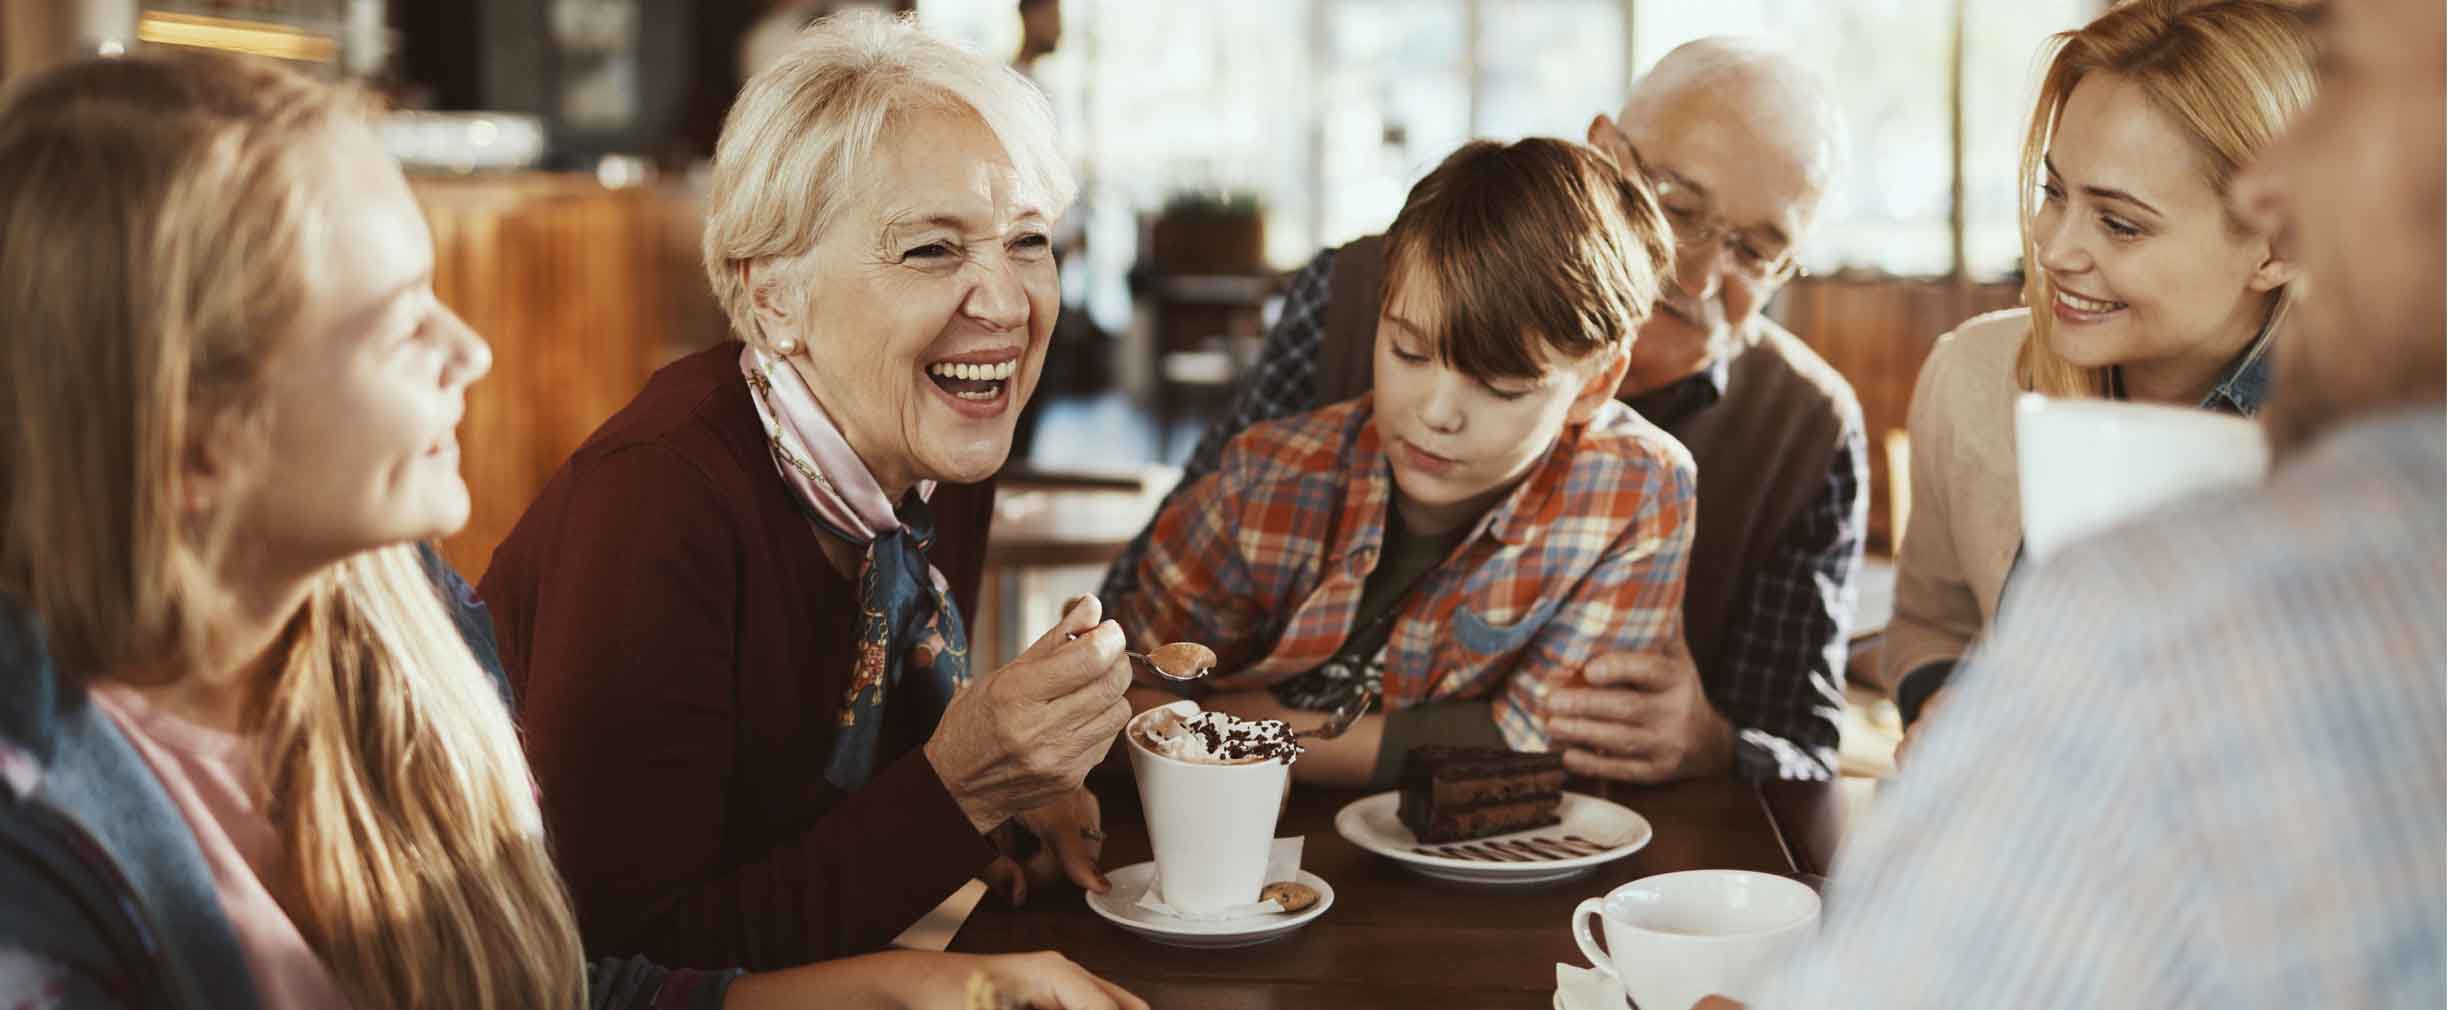 multi-generation family in a café